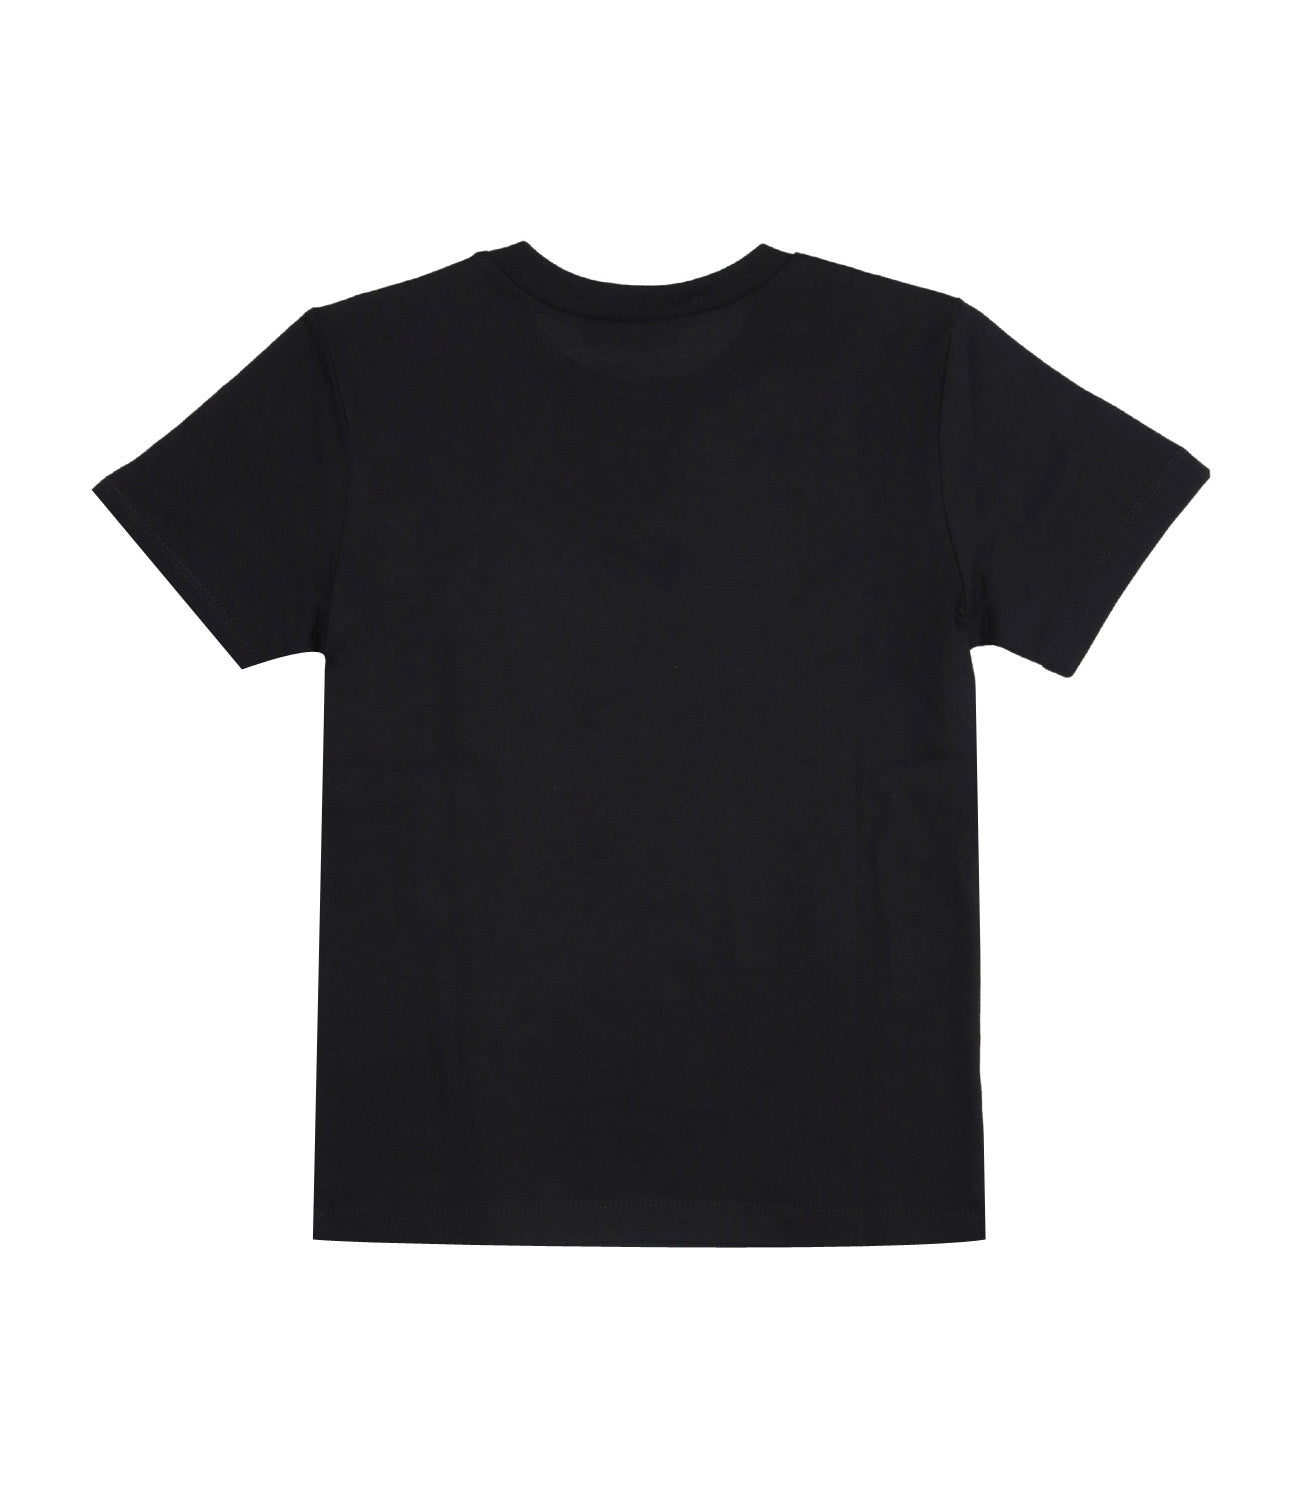 N 21 | Black T-Shirt